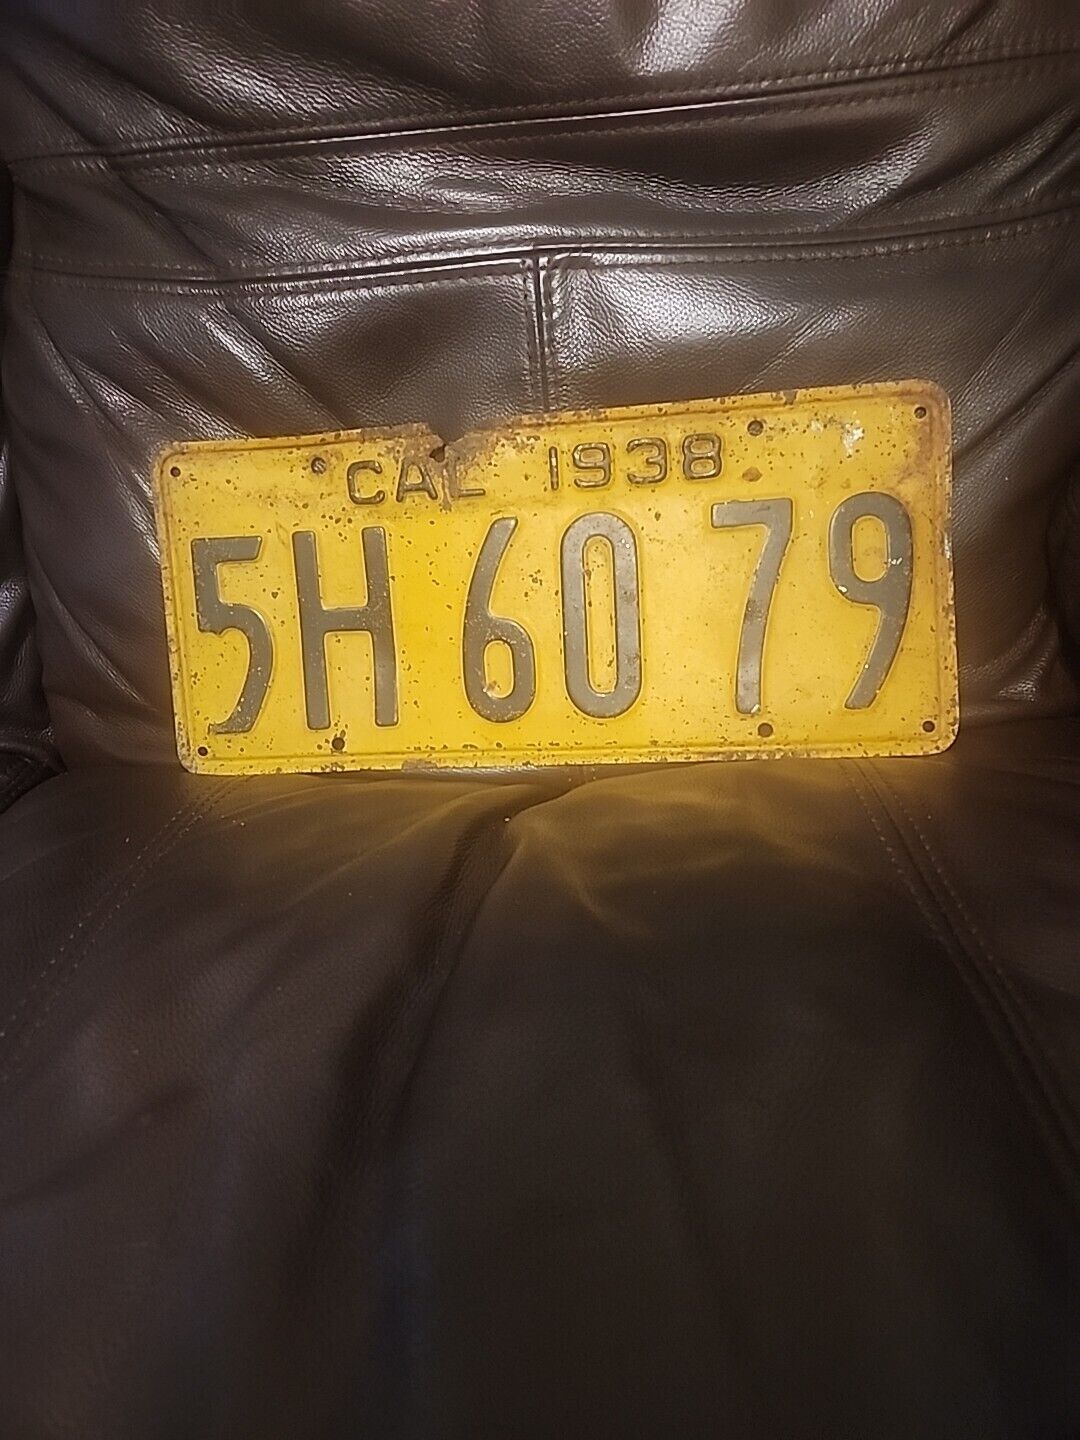 1938 California License Plate 5H 60 79